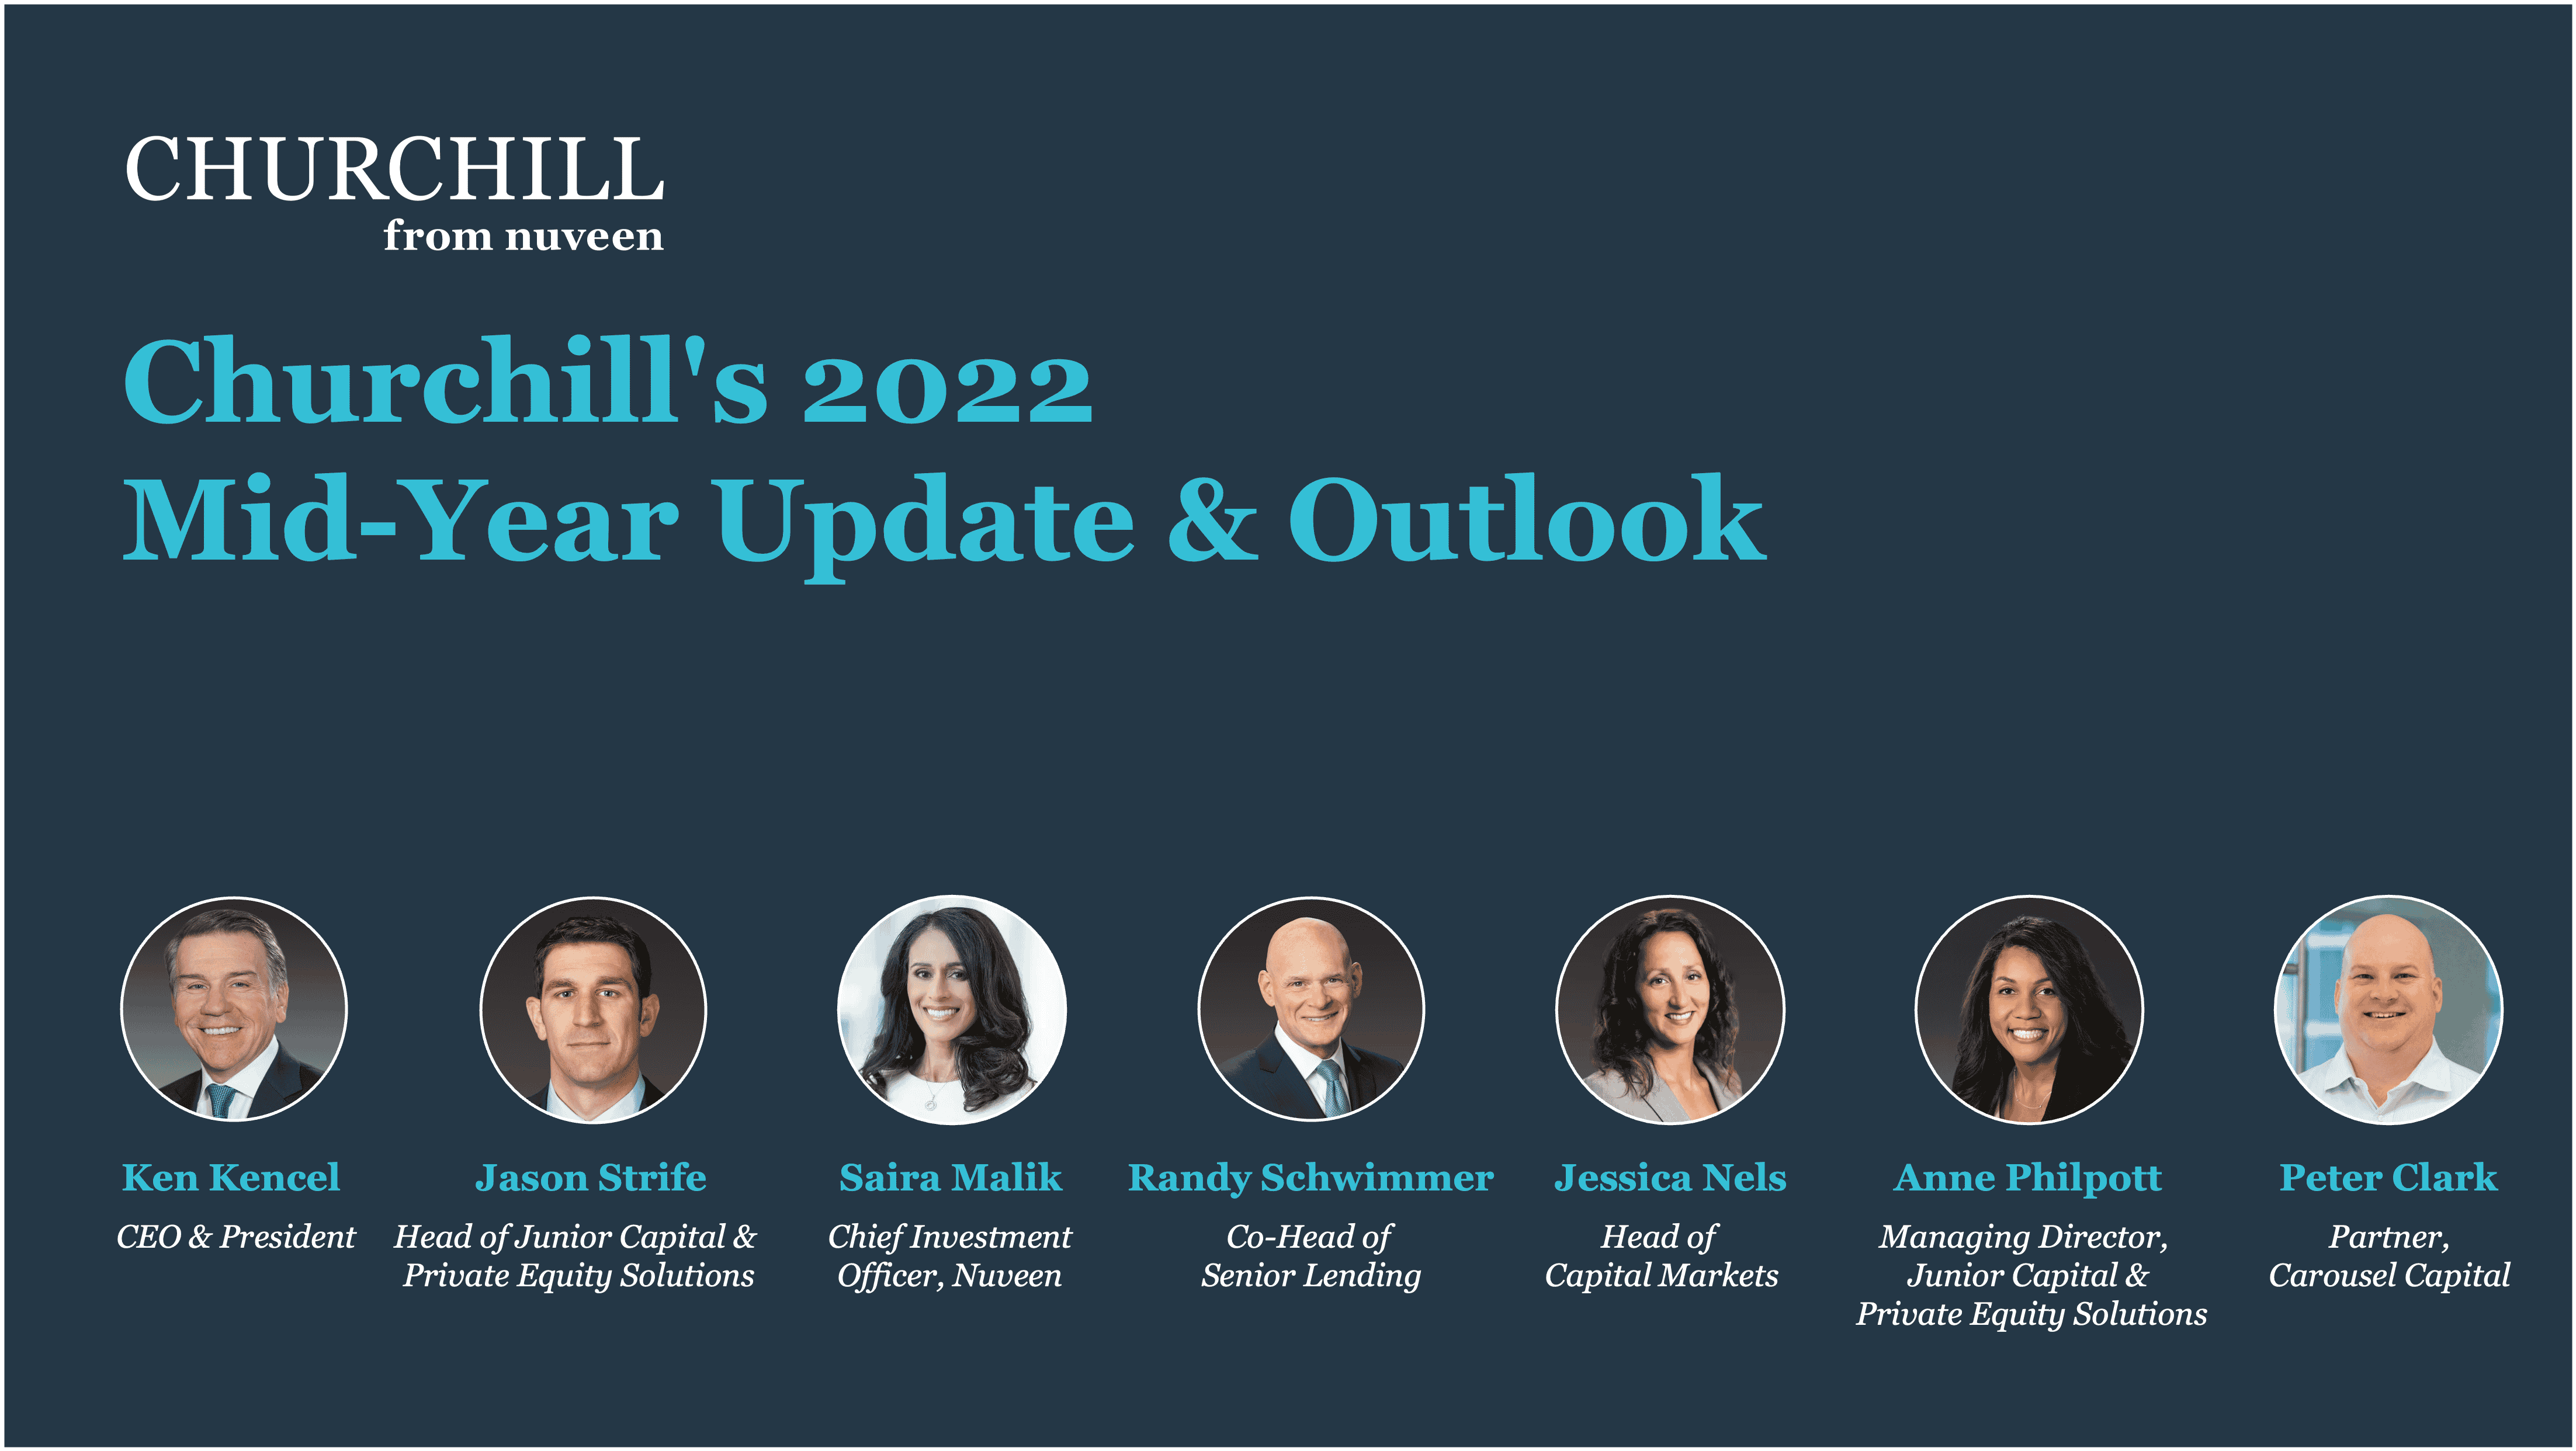 Churchill 2022 Mid-Year Update & Outlook v3